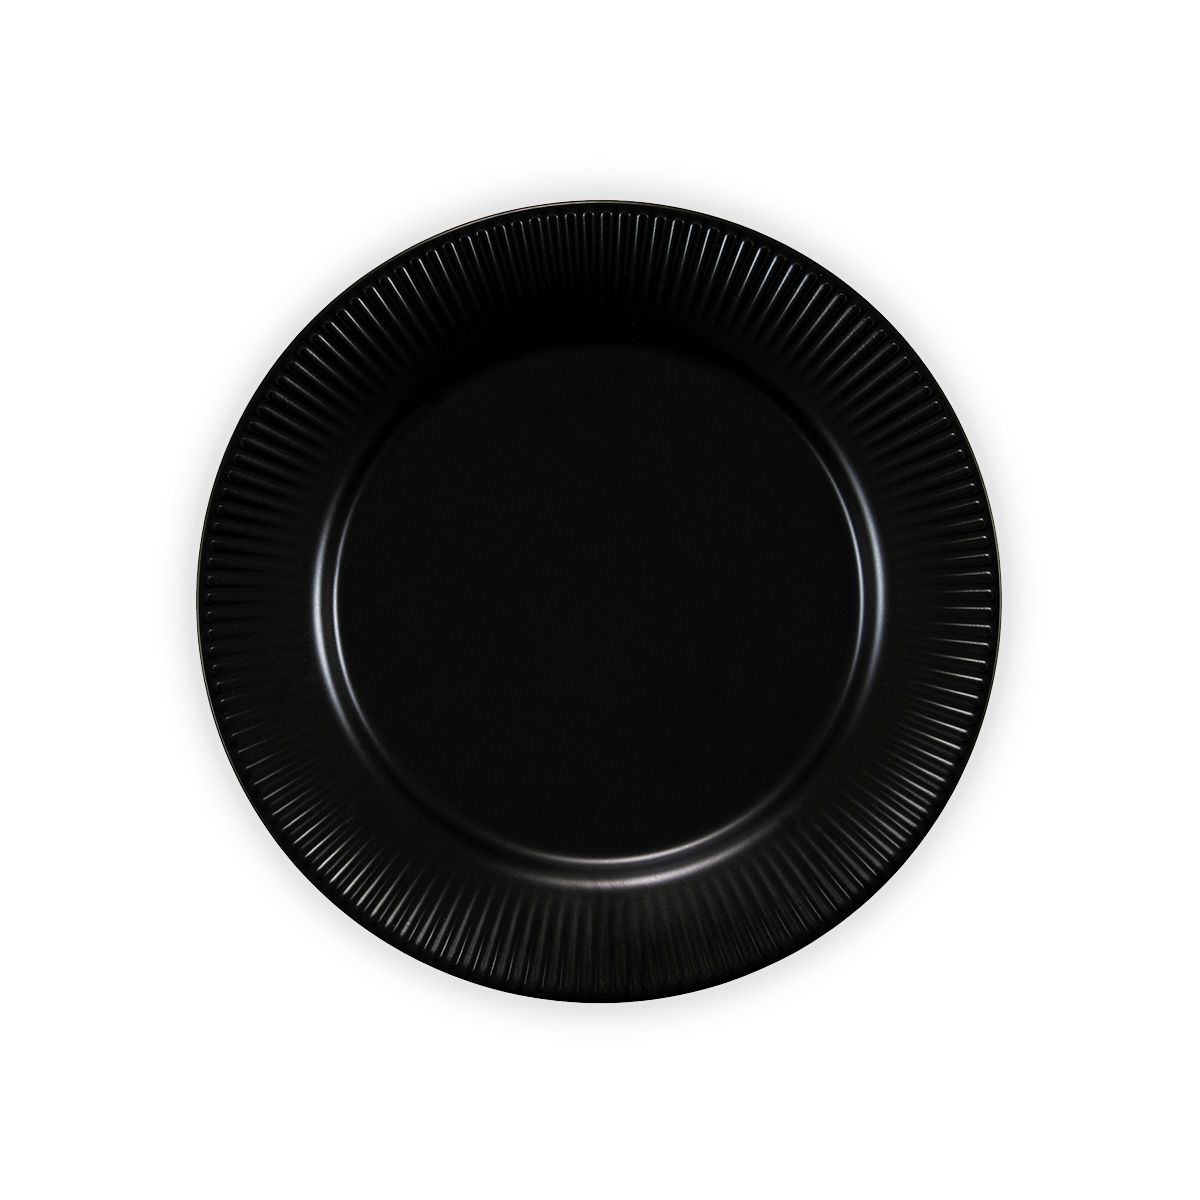 Bodum Douro Dinner Assiette Porcelaine Black Matt, 4 PCS.